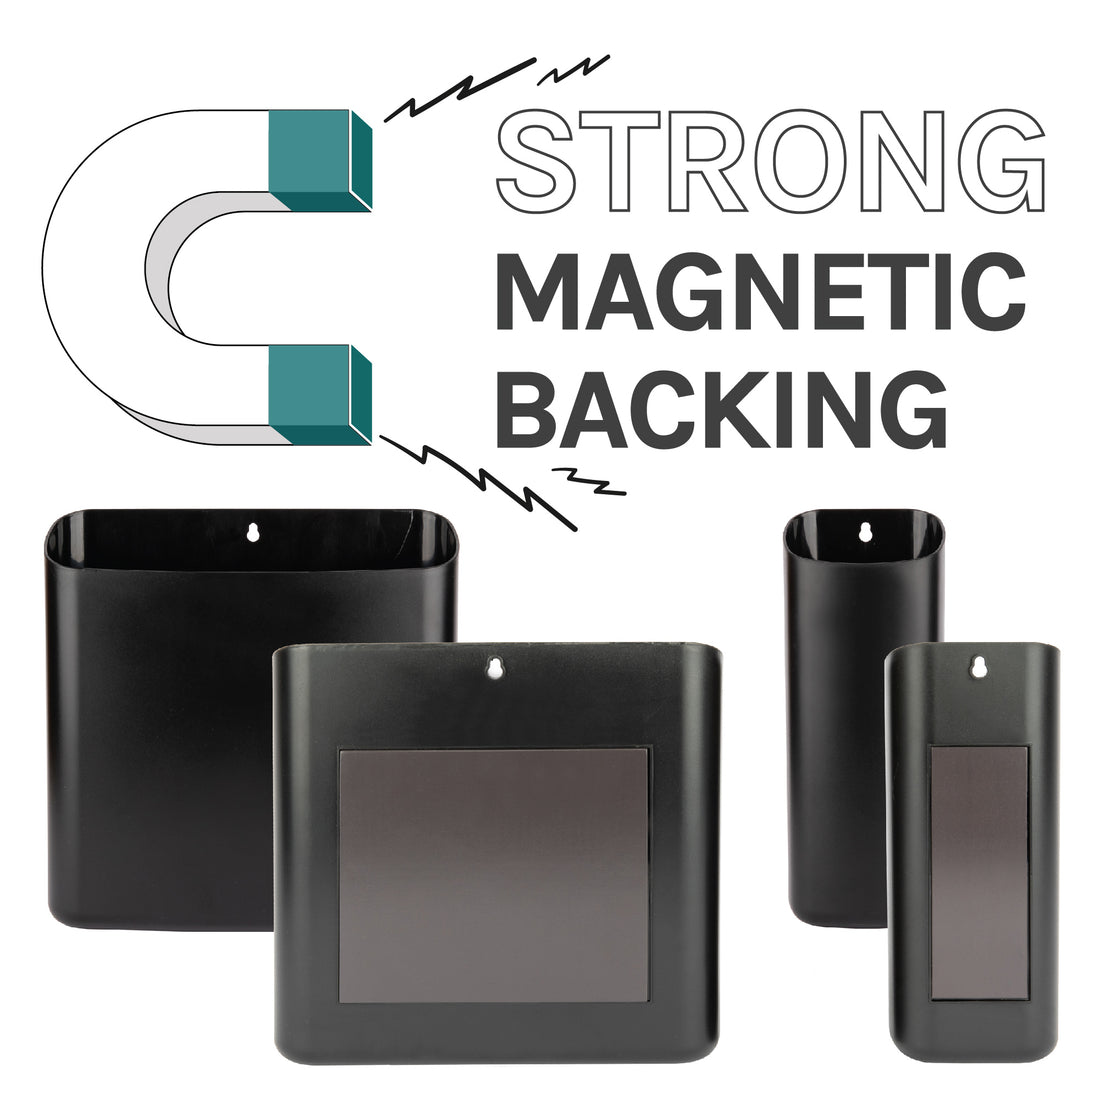 Magnetic Lint Bin Combo Pack (Black) - Utility sinks vanites Tehila